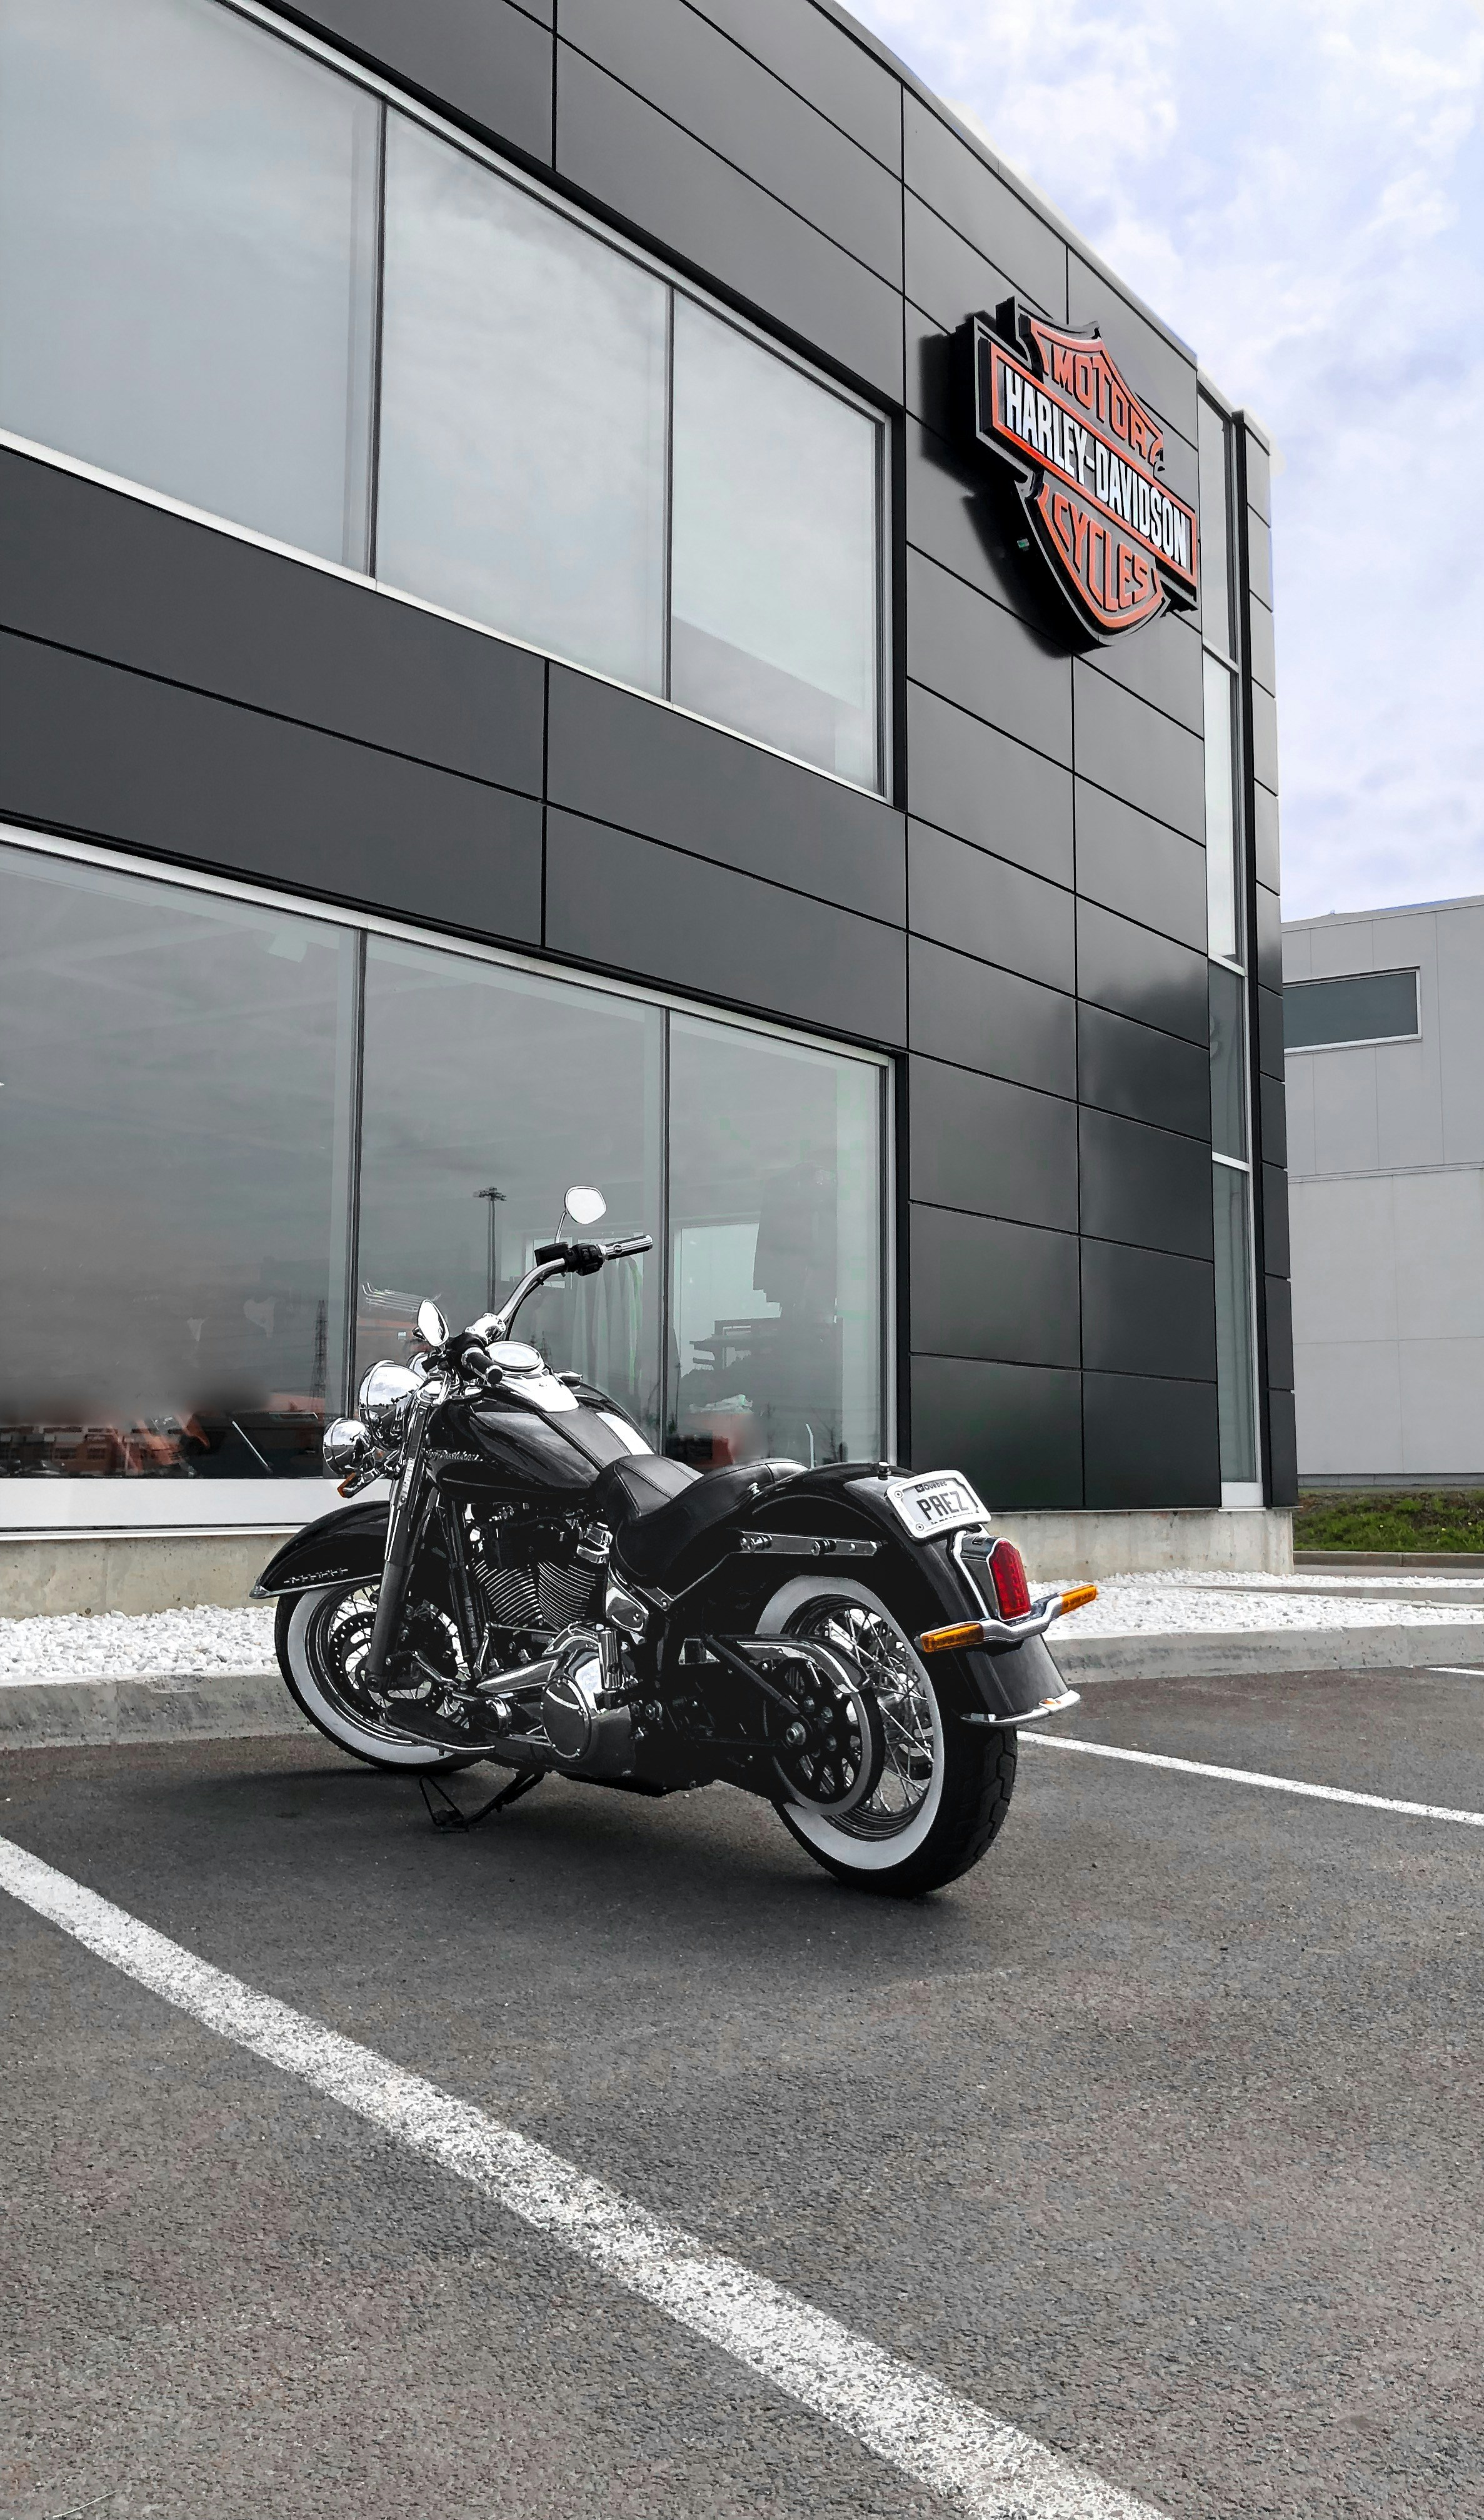 Harley-Davidson Dealership in Laval.